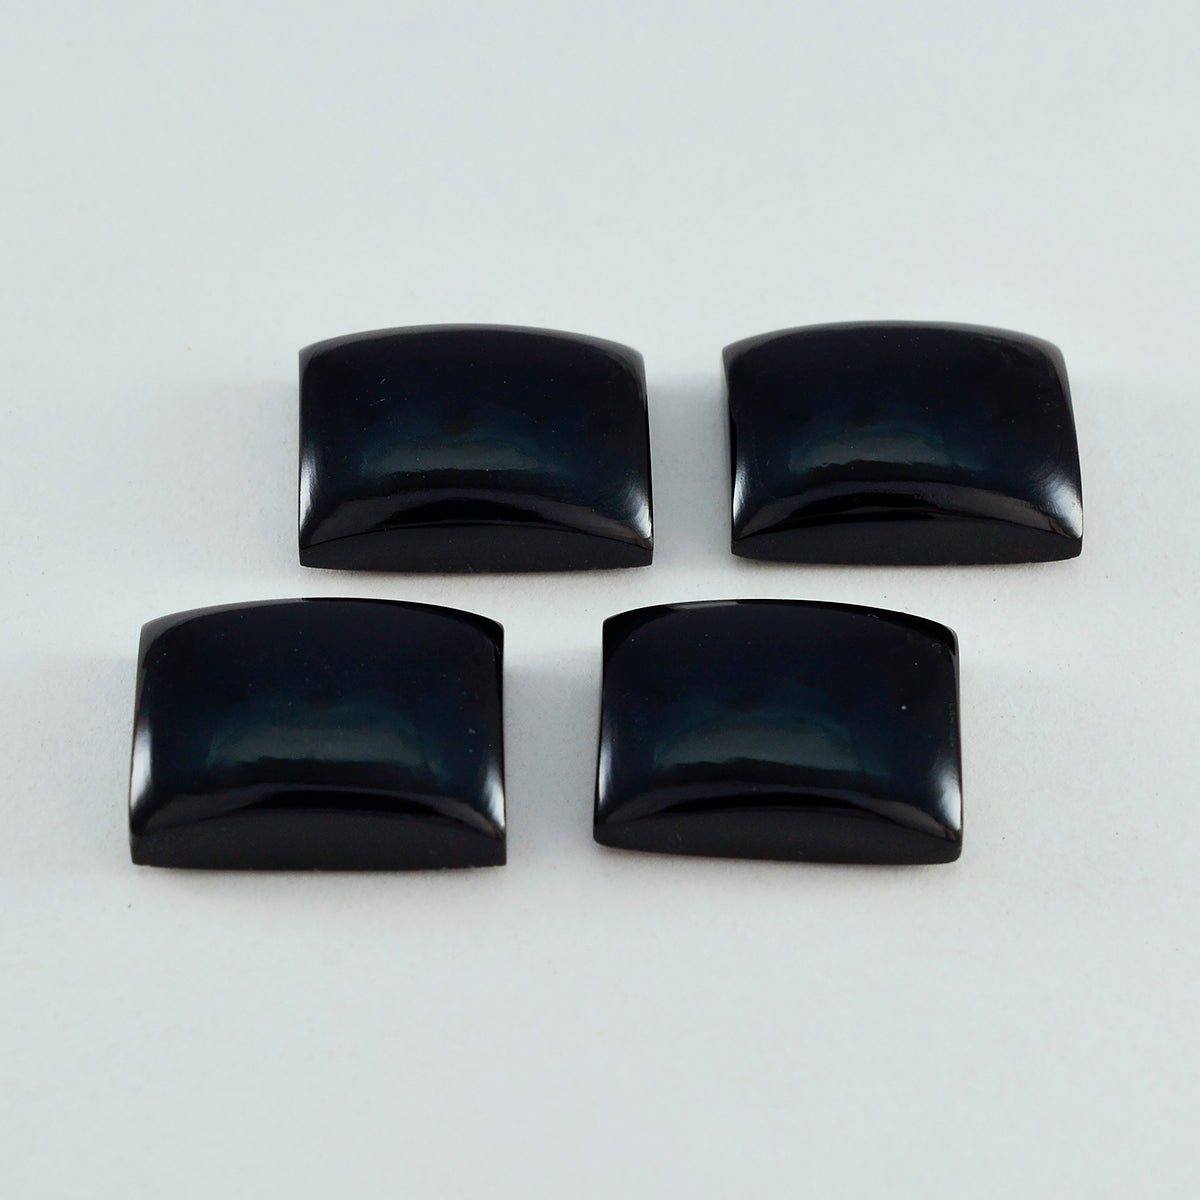 Riyogems 1PC zwarte onyx cabochon 12x16 mm achthoekige vorm, geweldige kwaliteit edelsteen